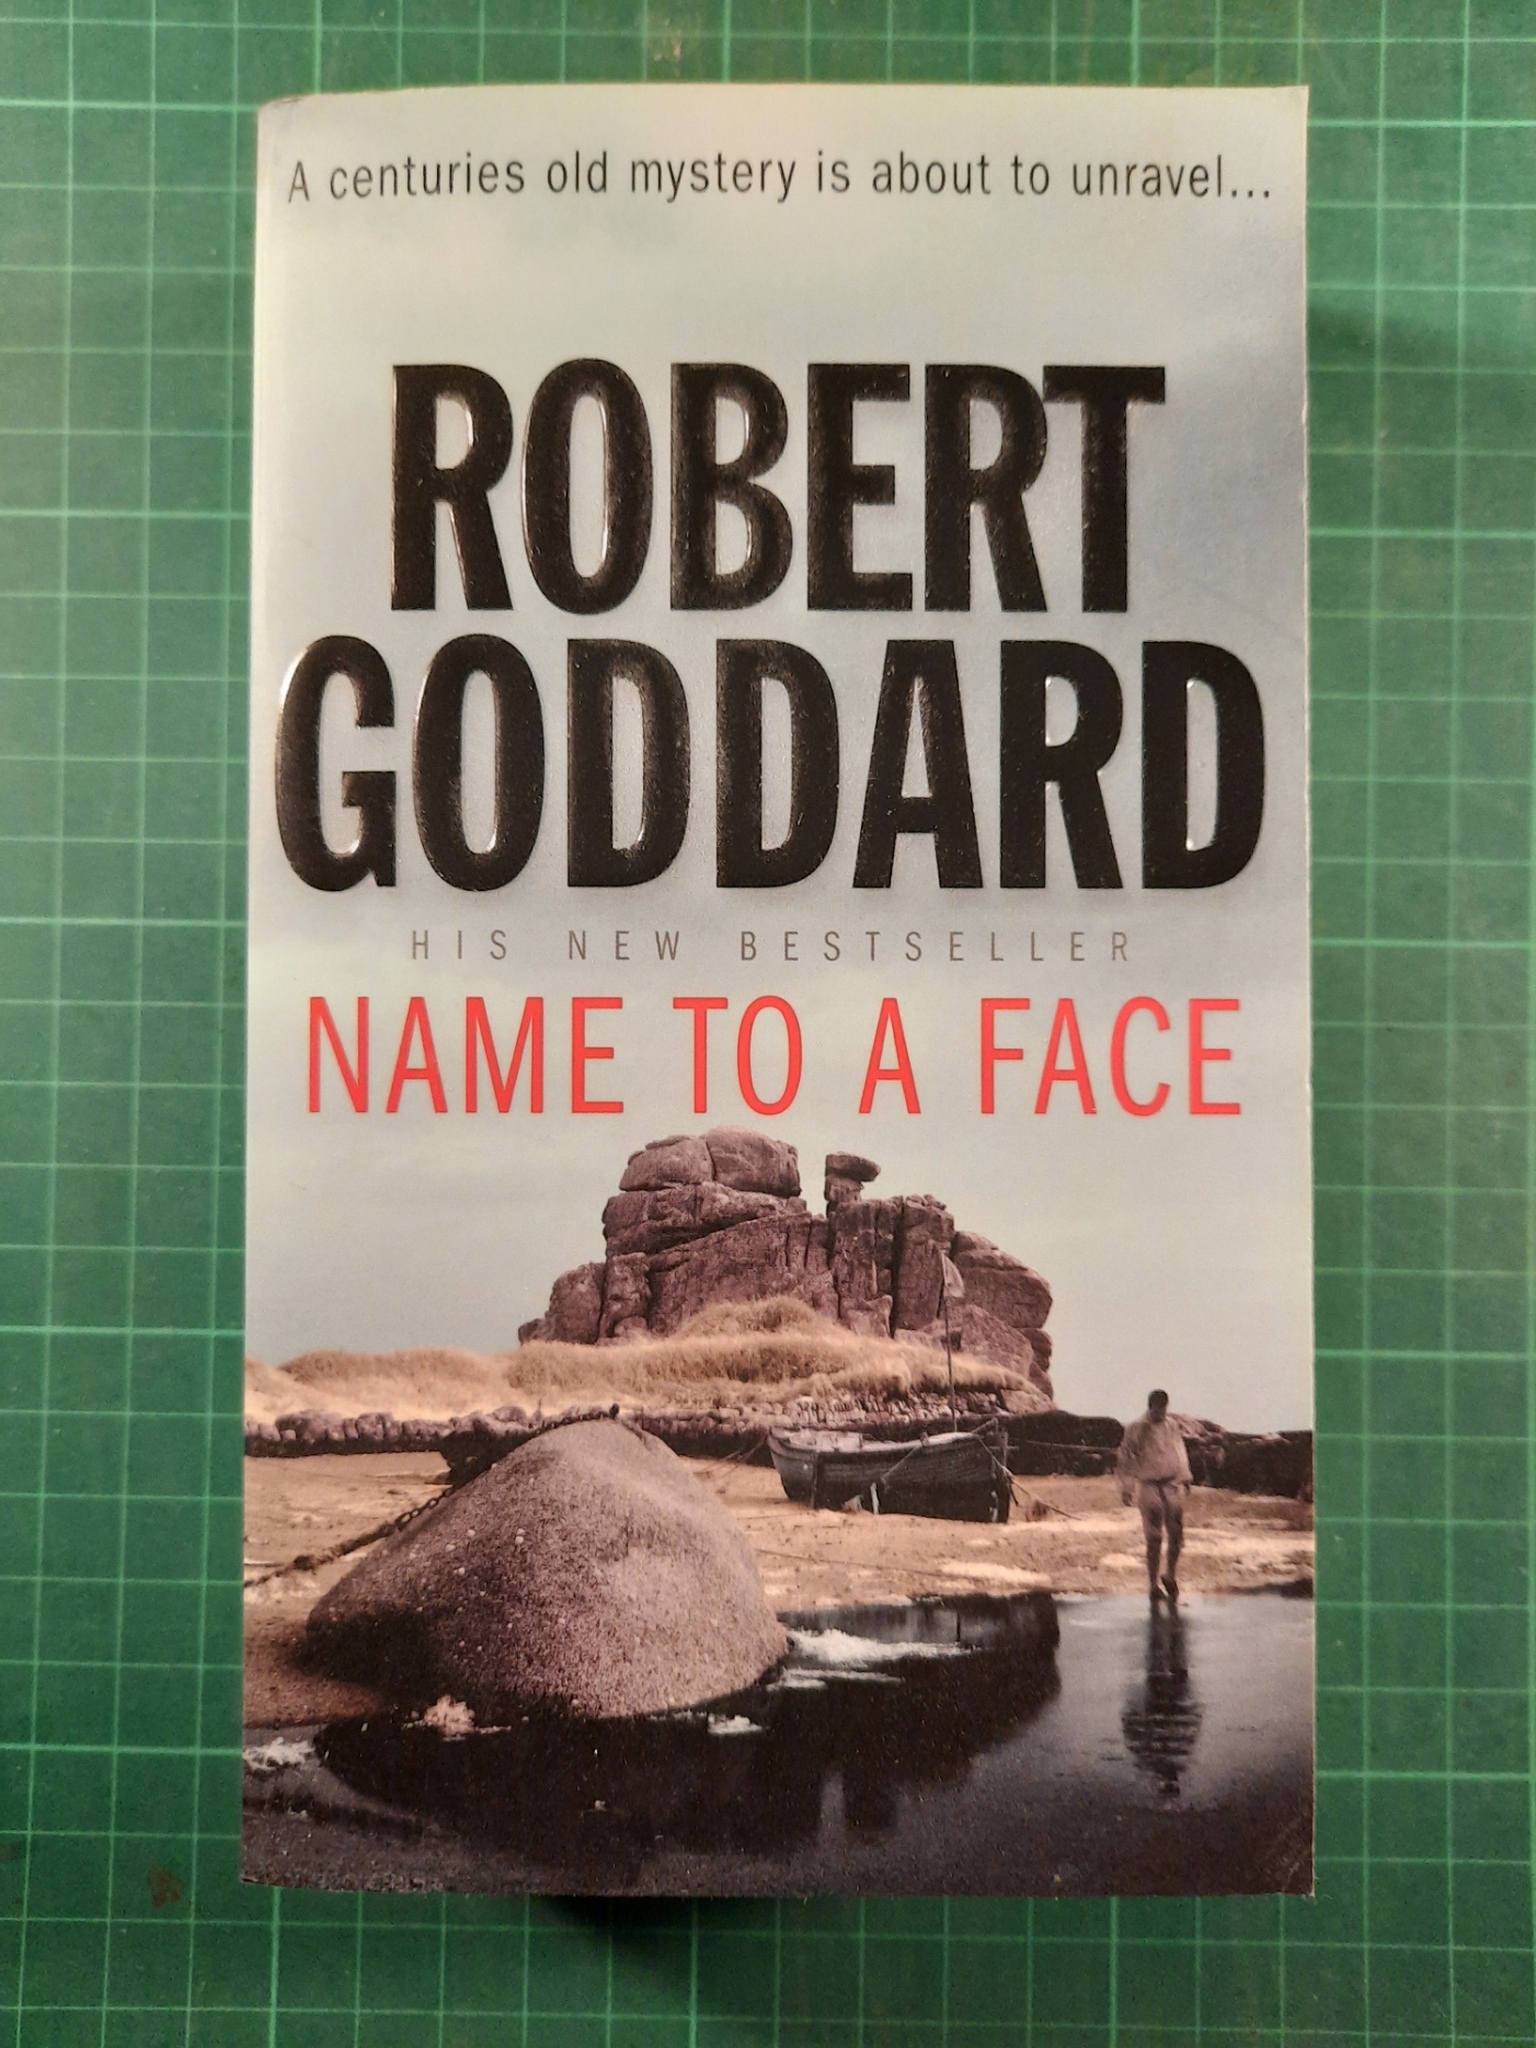 Robert Goddard : Name to a face